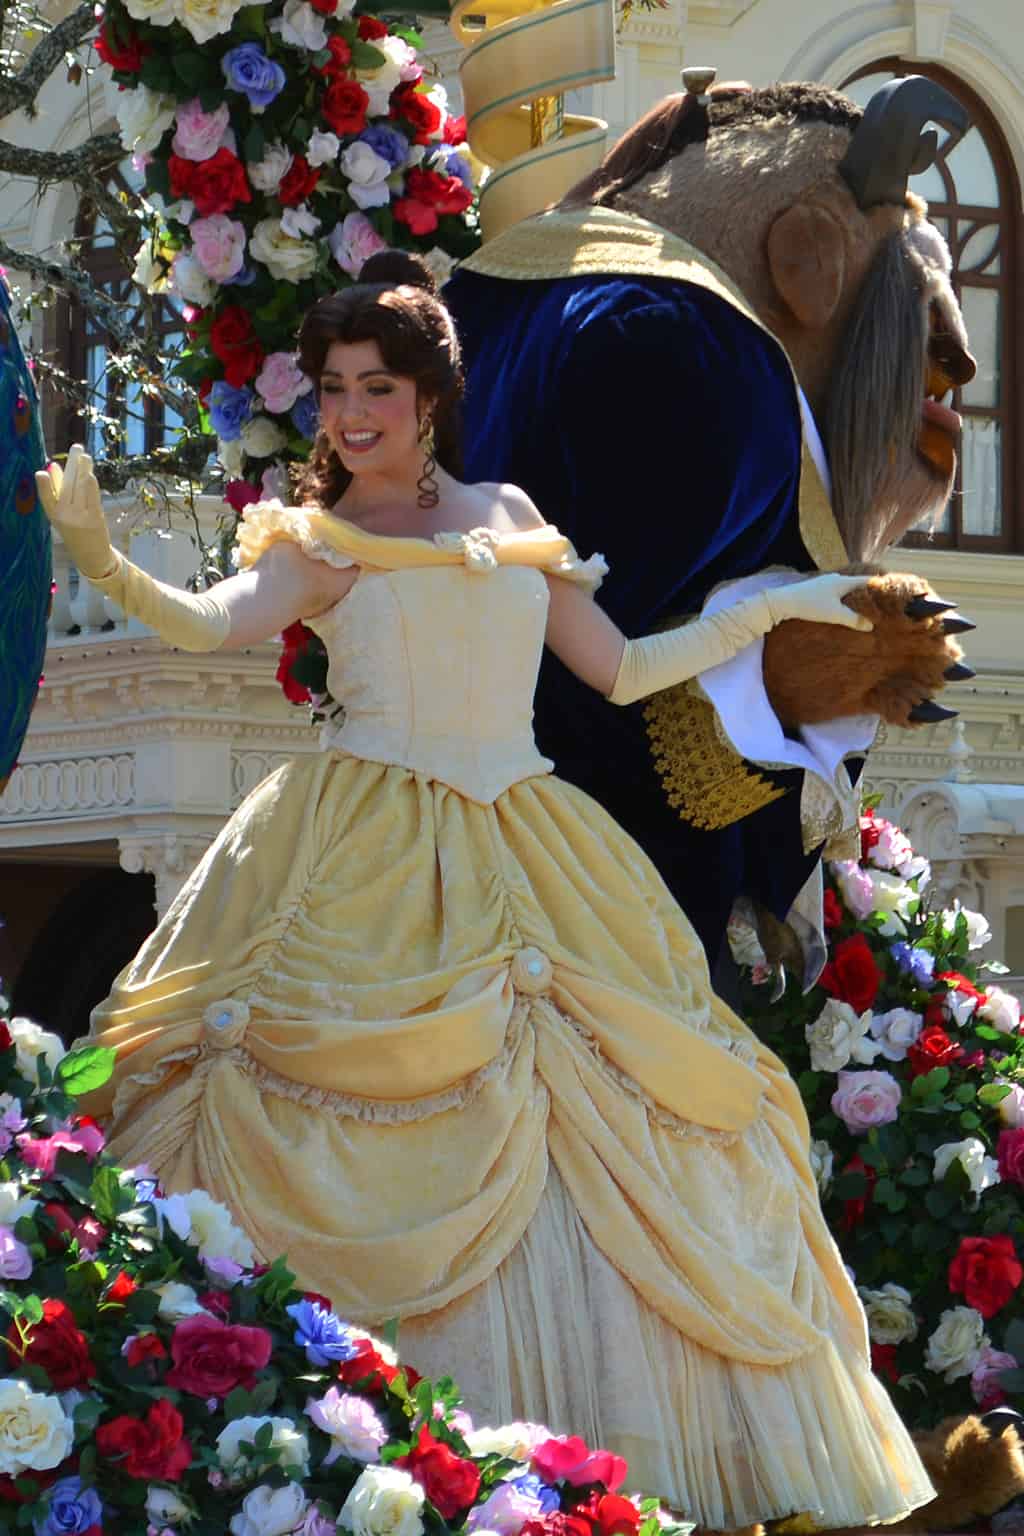 Walt Disney World, Magic Kingdom, Festival of Fantasy Parade, Belle and Beast